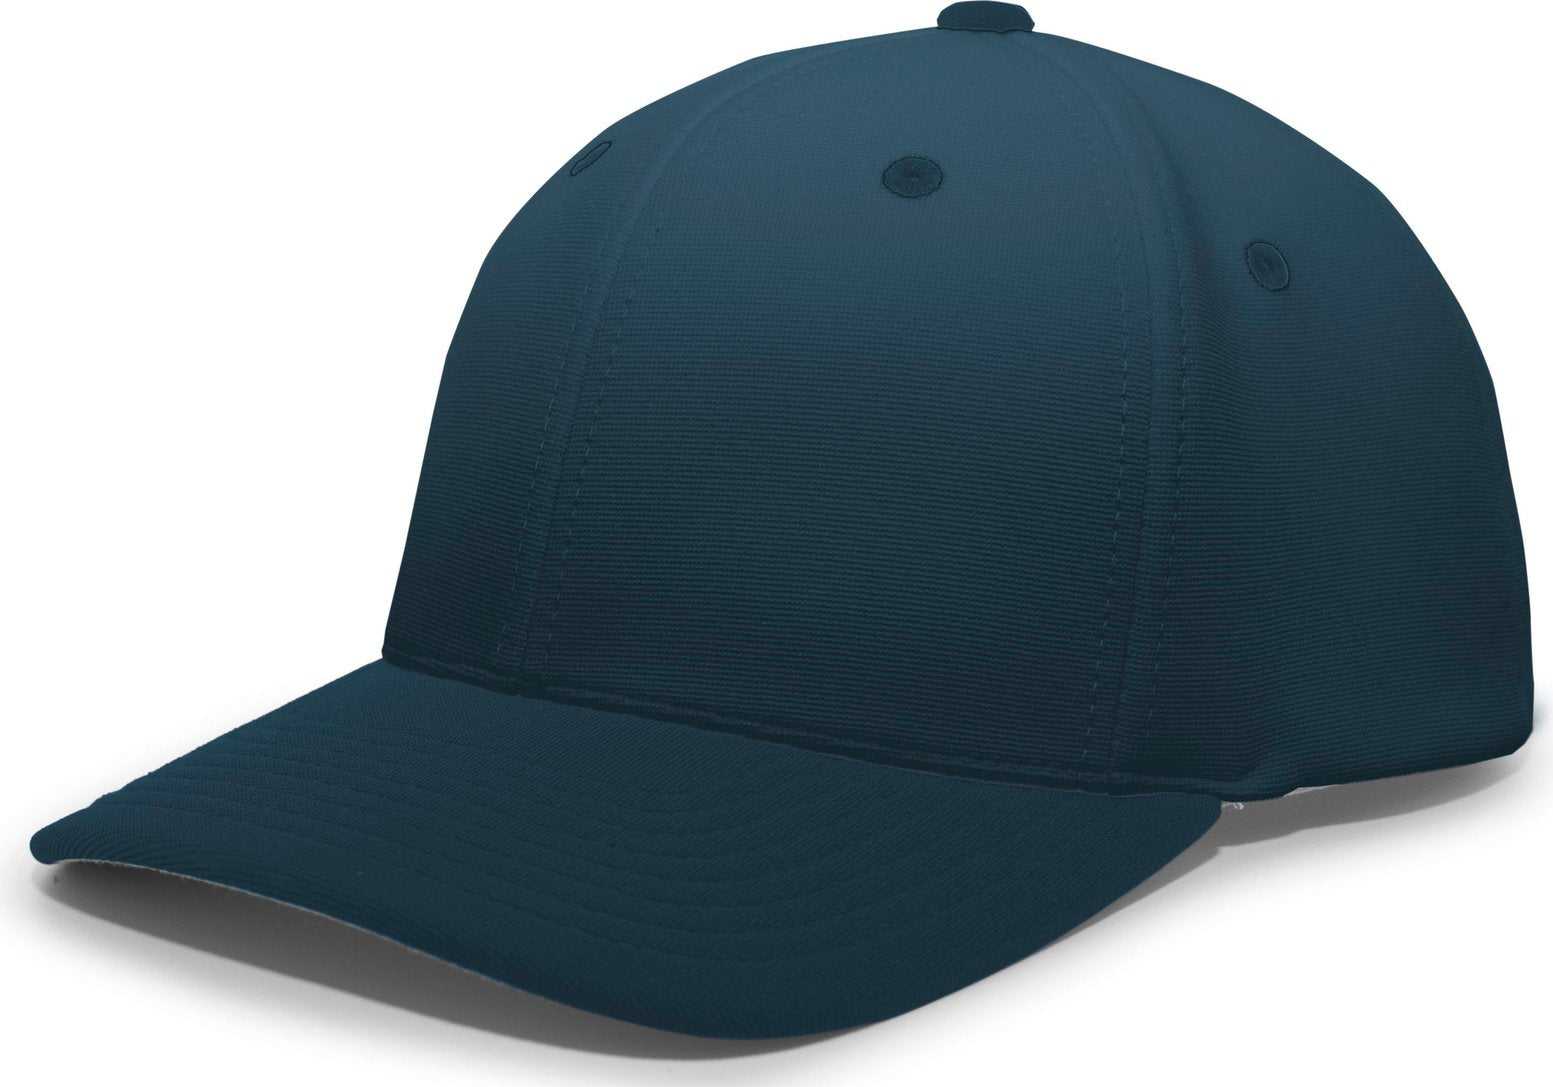 Pacific Headwear 498F M2 Performance Flexfit Cap - Dark Green - HIT a Double